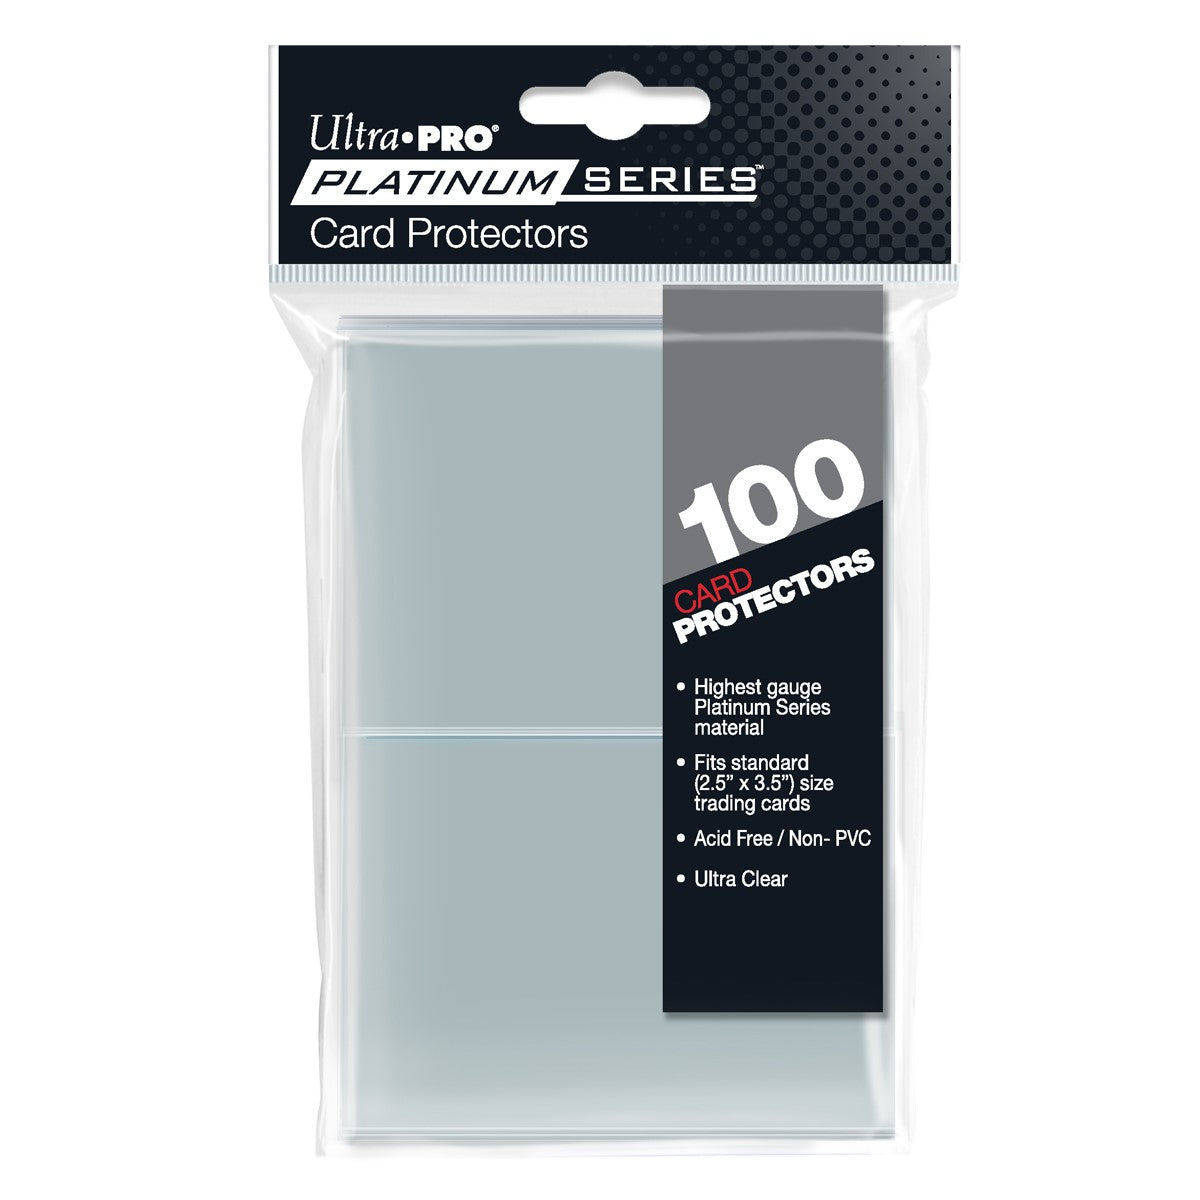 Ultra Pro - Platinum Series Card Protectors - Ultra Clear (100)